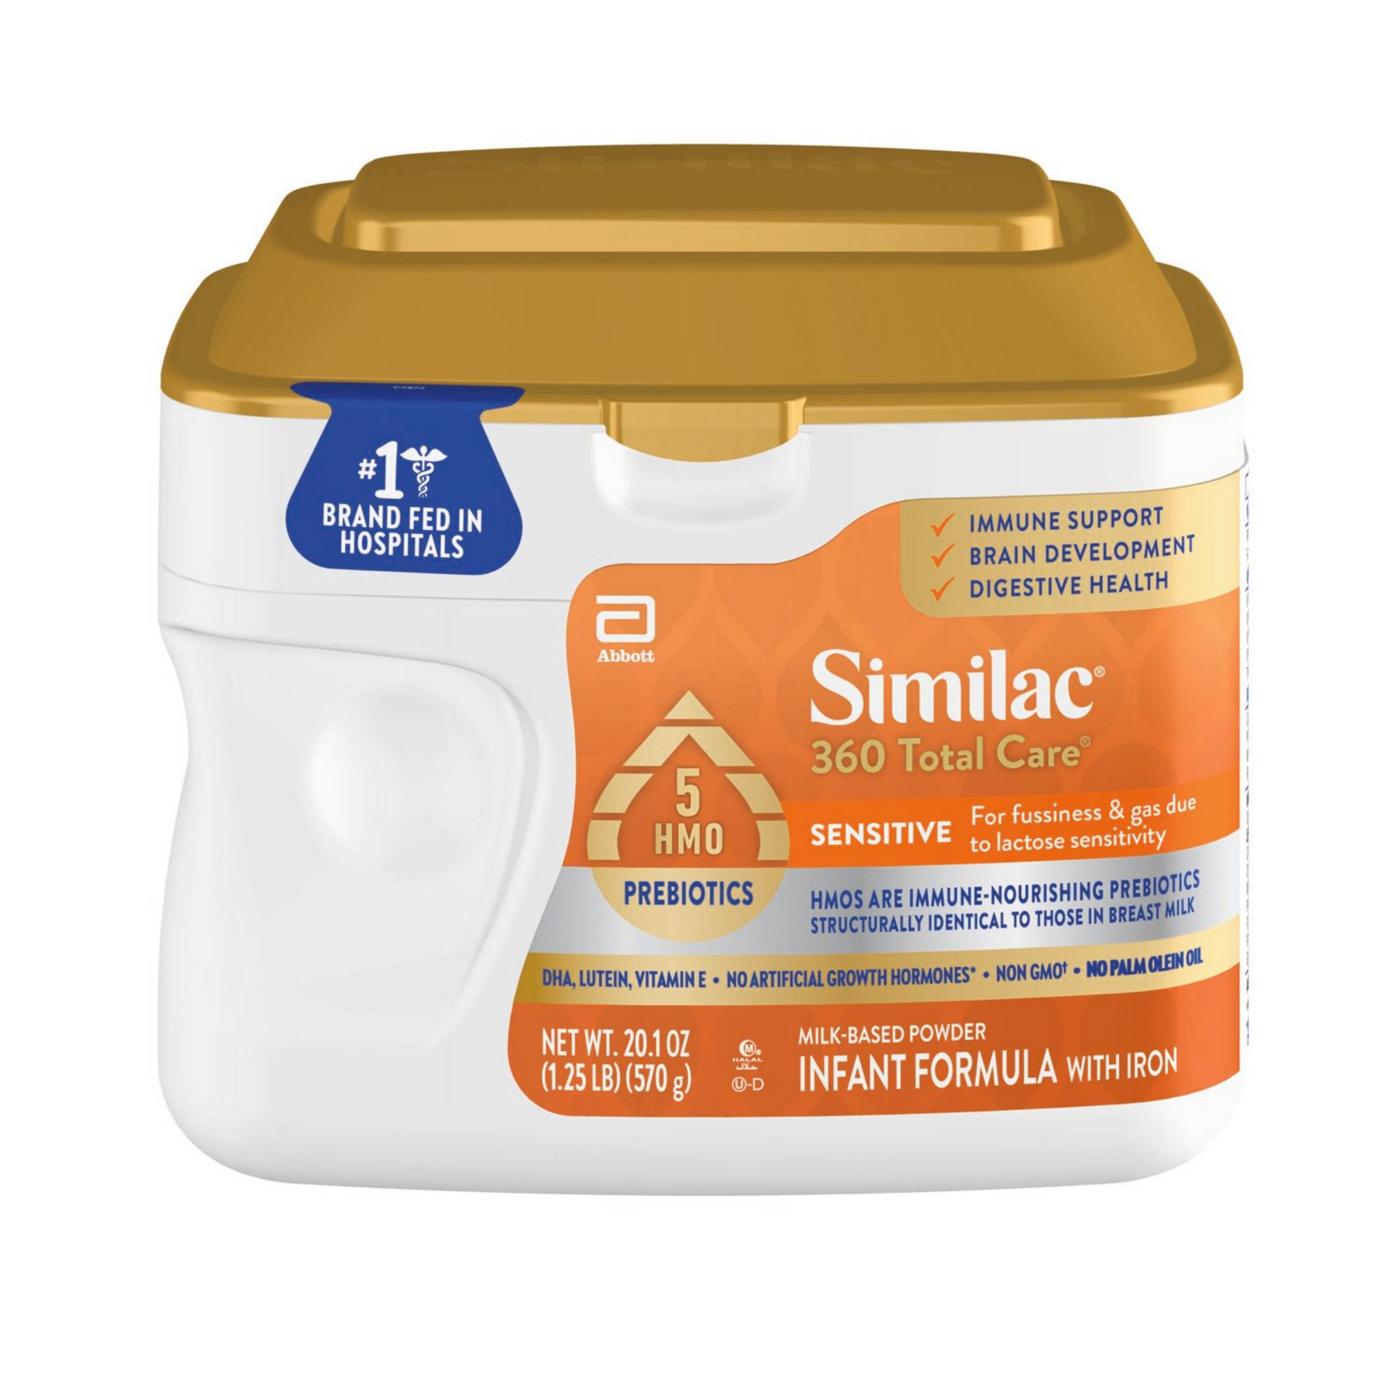 Similac 360 Total Care Sensitive Infant Formula Powder with 5 HMO Prebiotics Tub; image 6 of 16